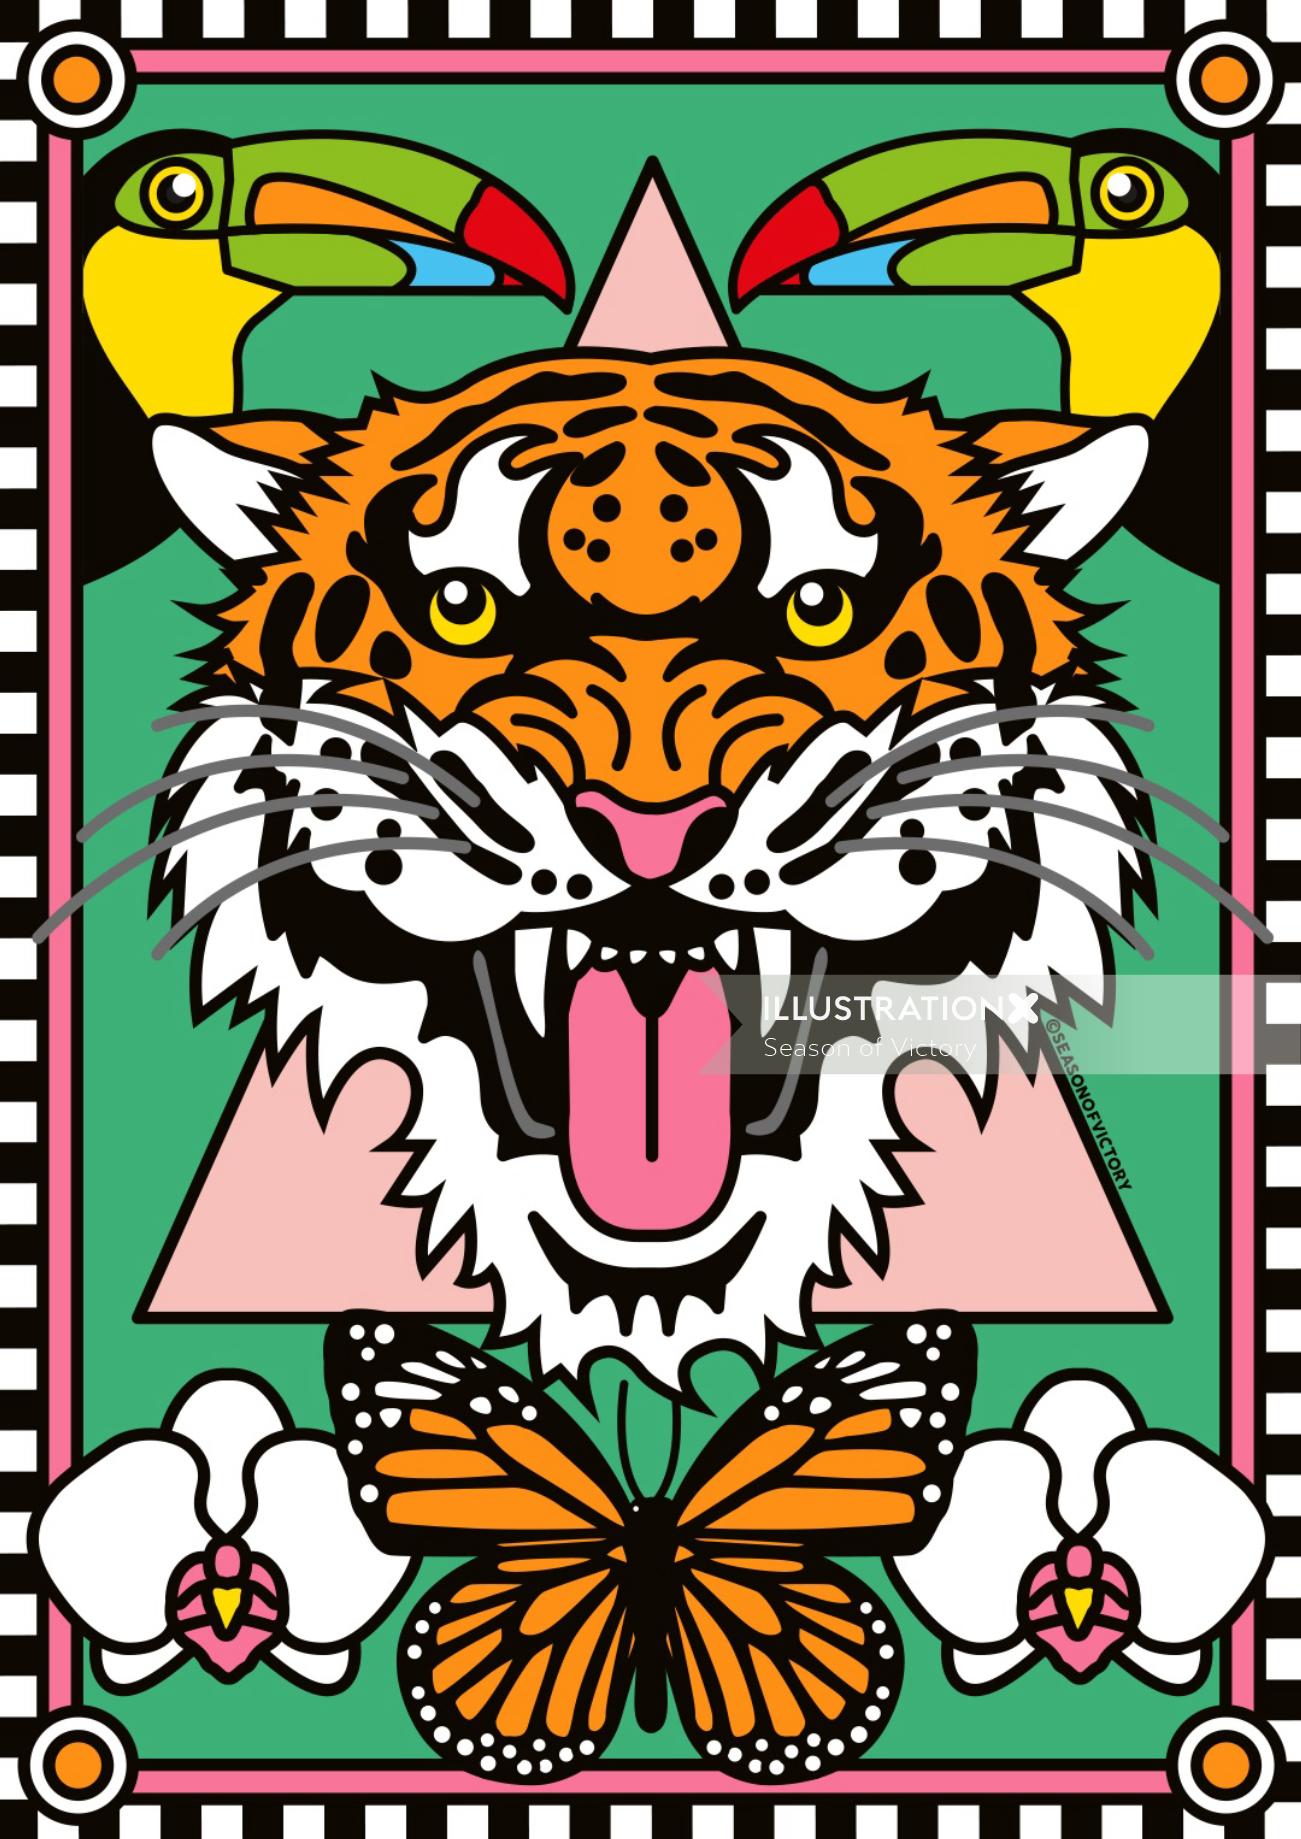 Decorative design based on the jungle motif